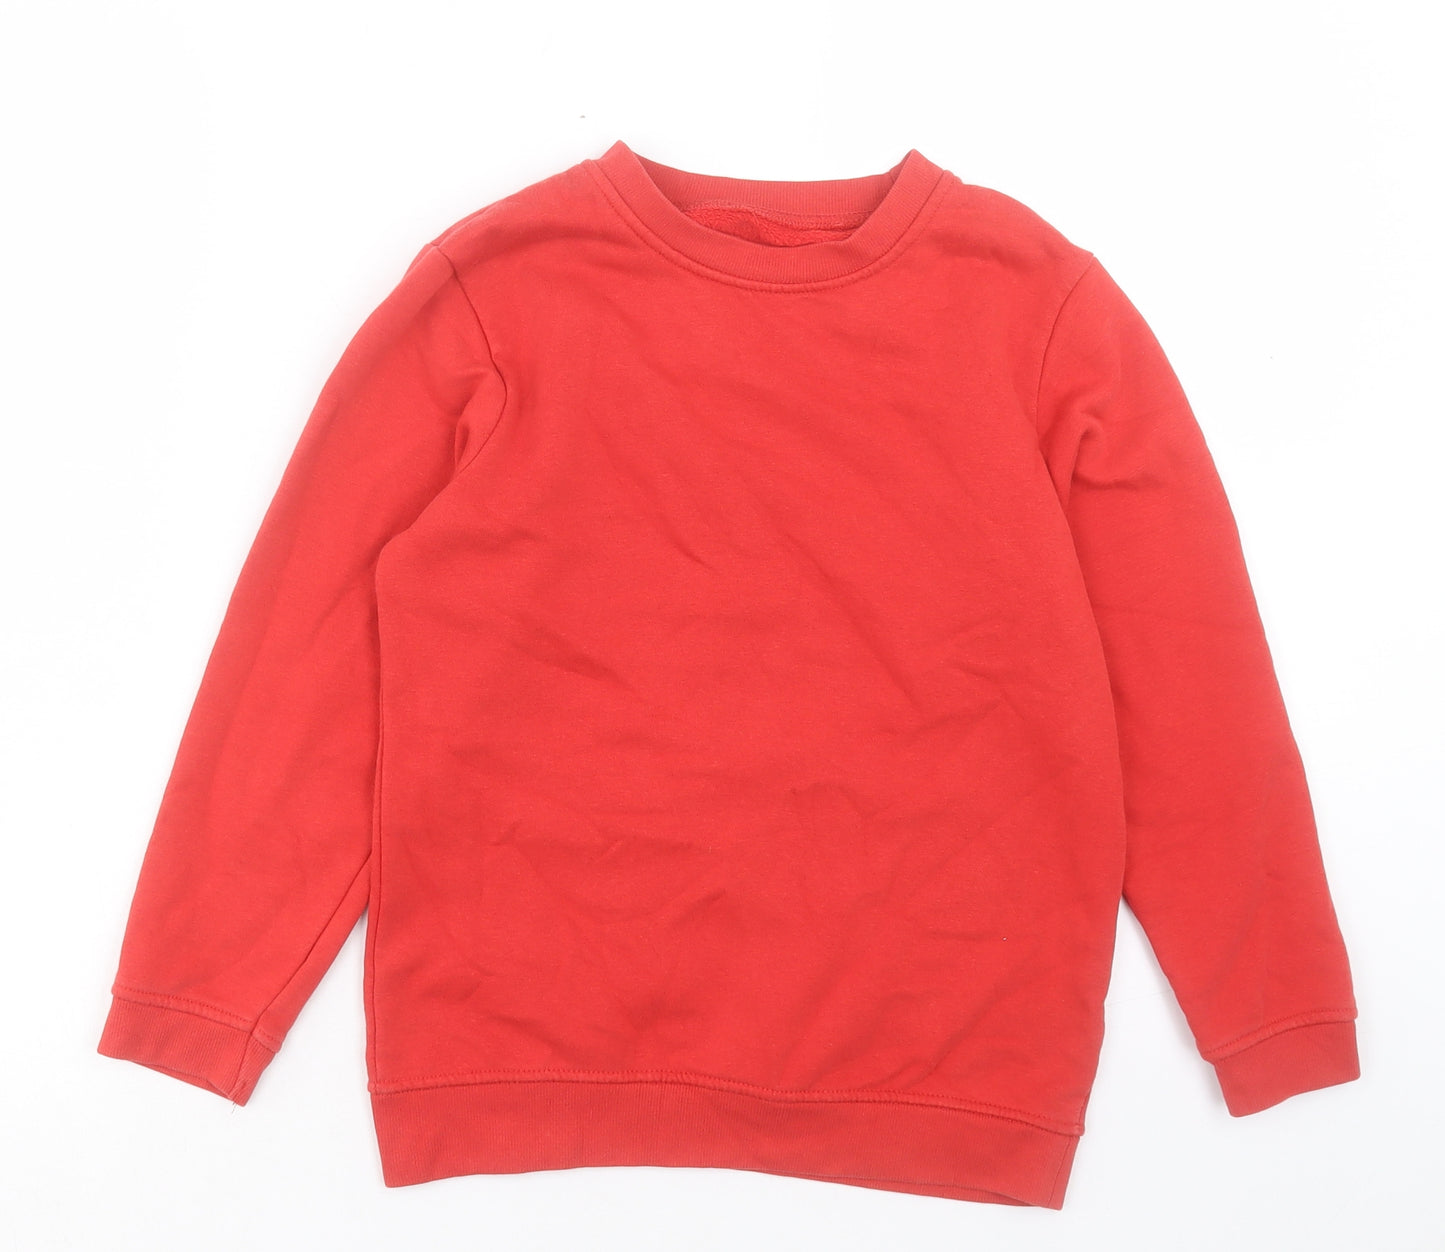 Nutmeg Boys Red Cotton Pullover Sweatshirt Size 8-9 Years Pullover - School Wear